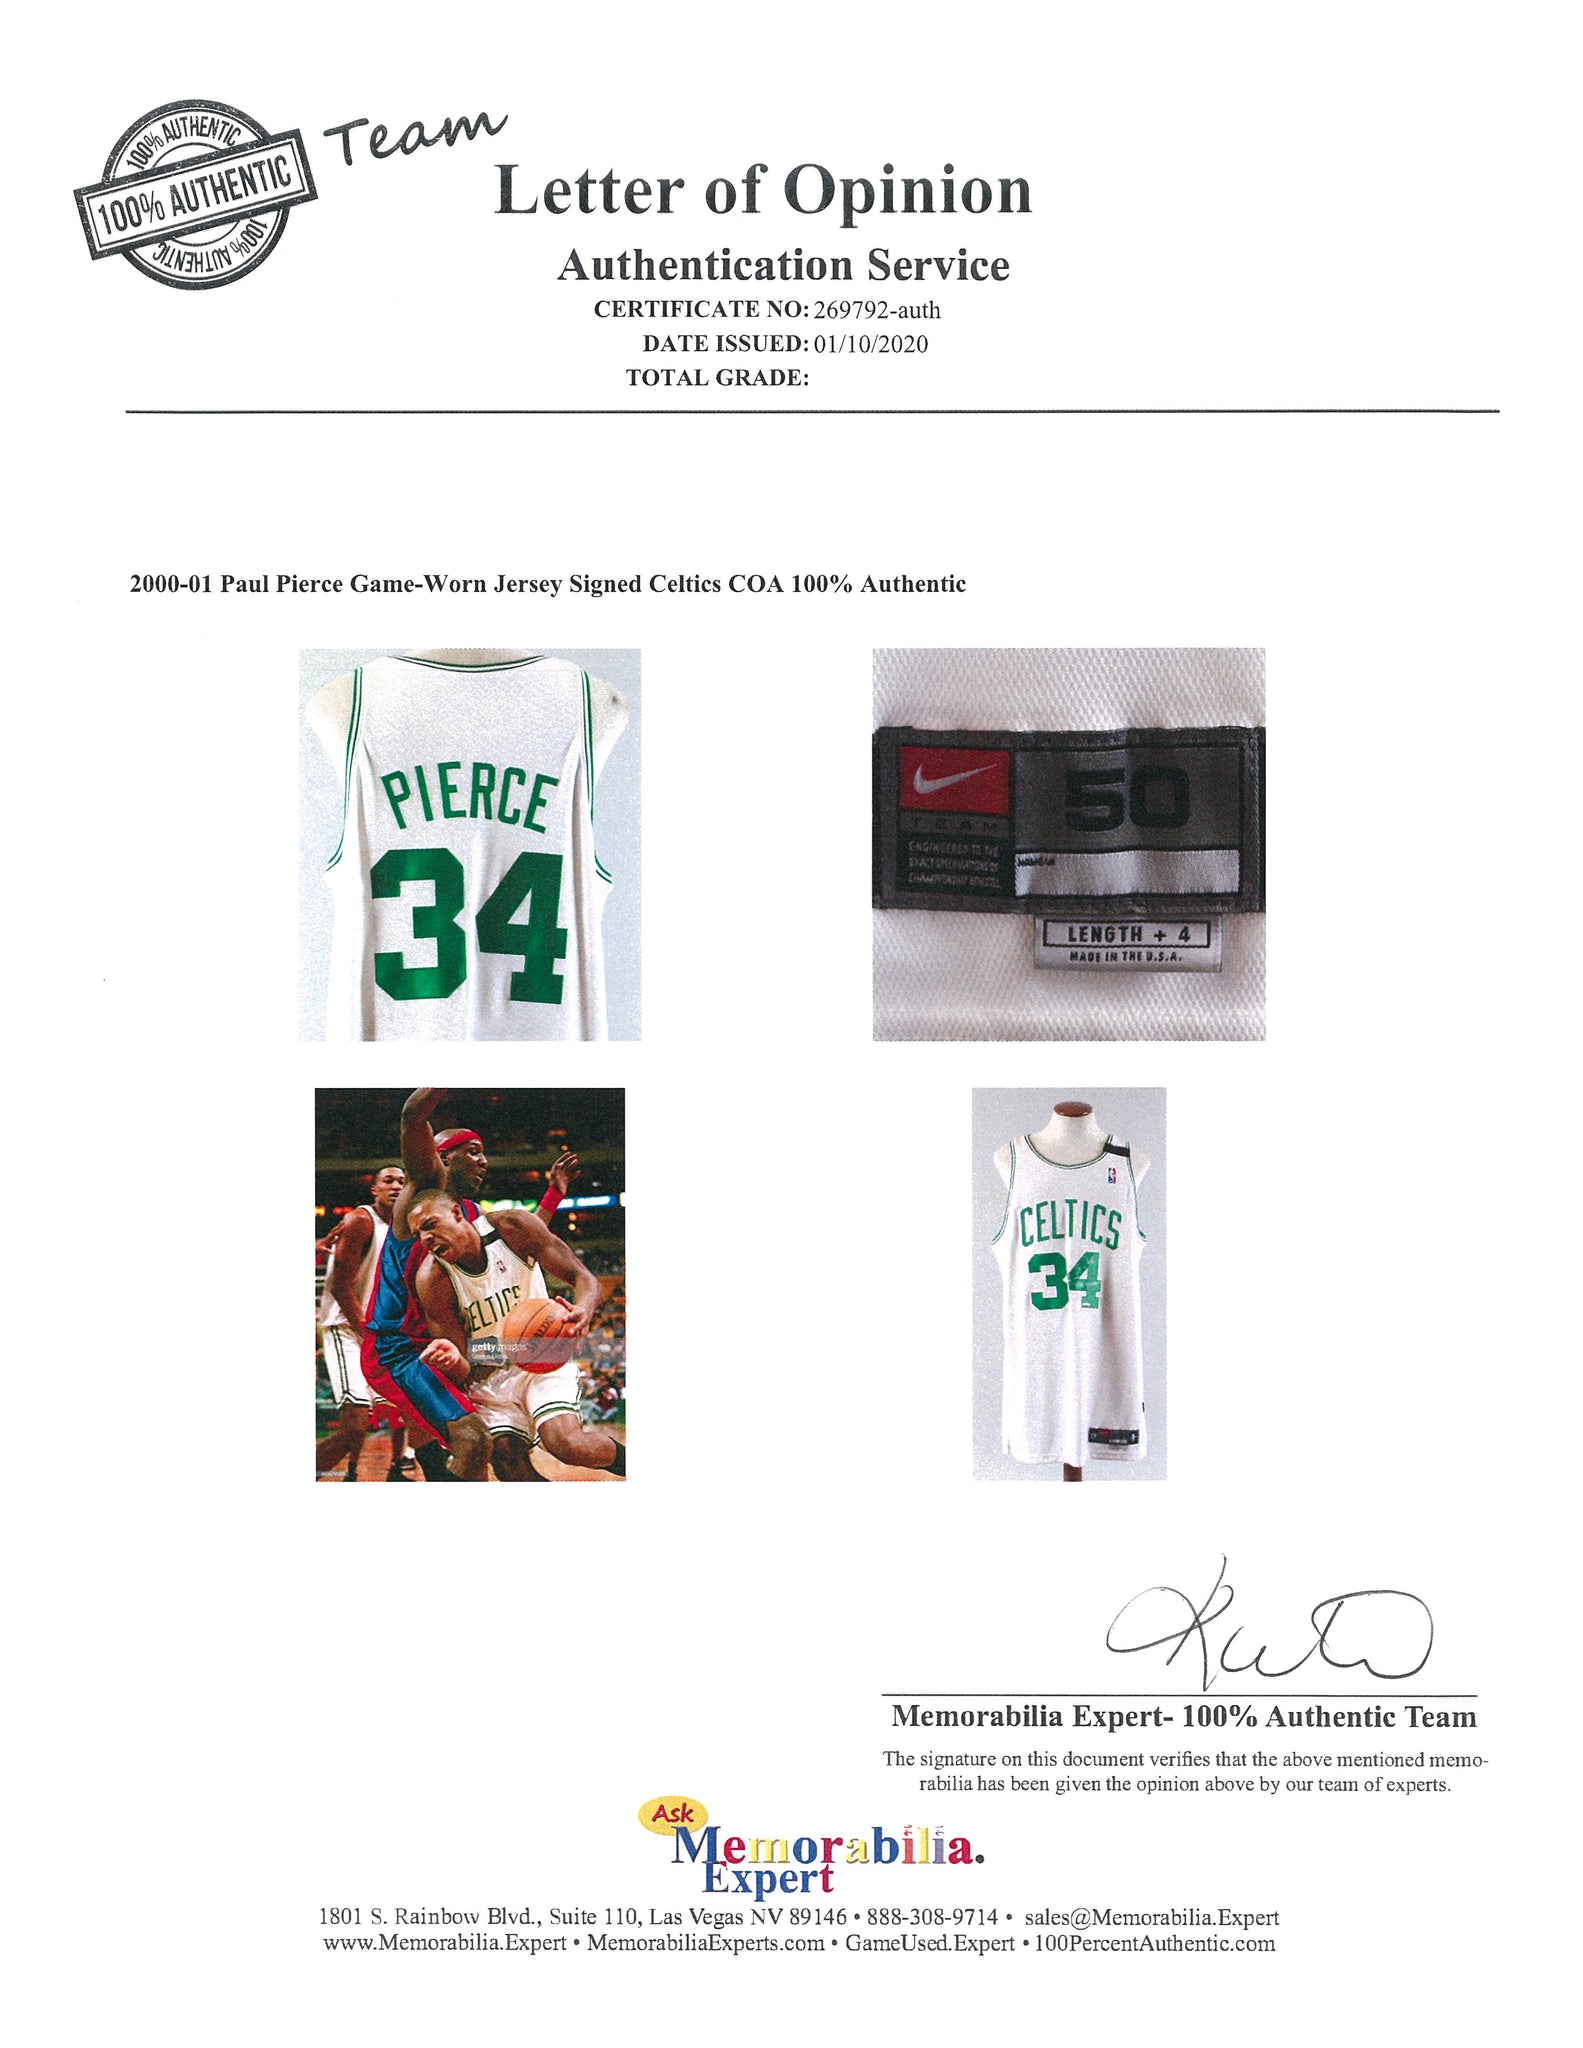 2007 Paul Pierce Game Worn Europe Live Tour Boston Celtics, Lot #53086